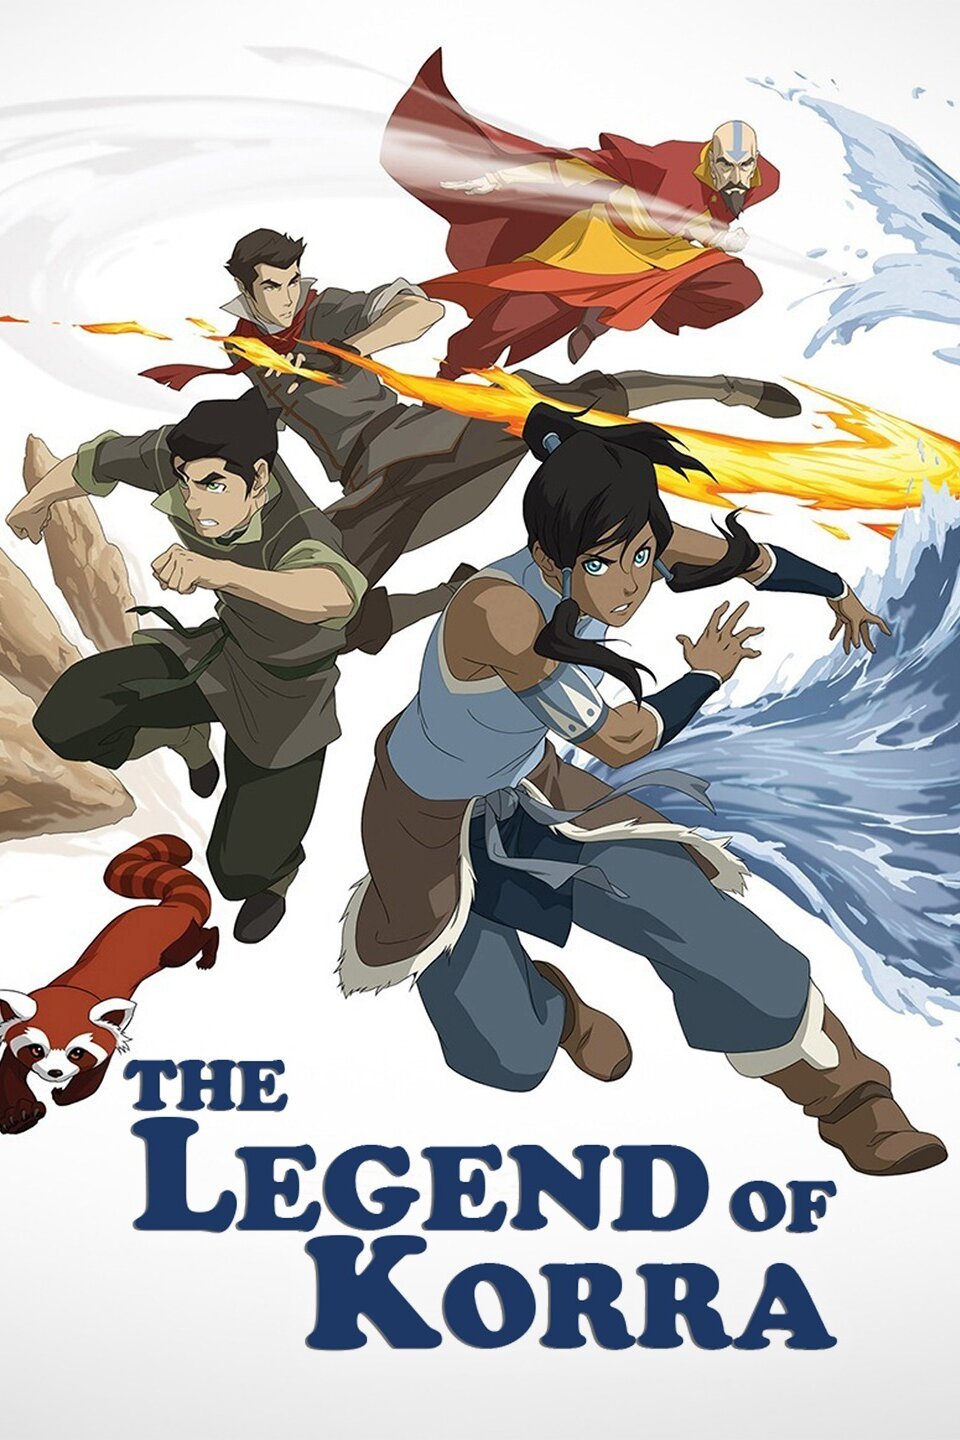 Avatar The Last Airbender characters in The Legend of Korra  EWcom